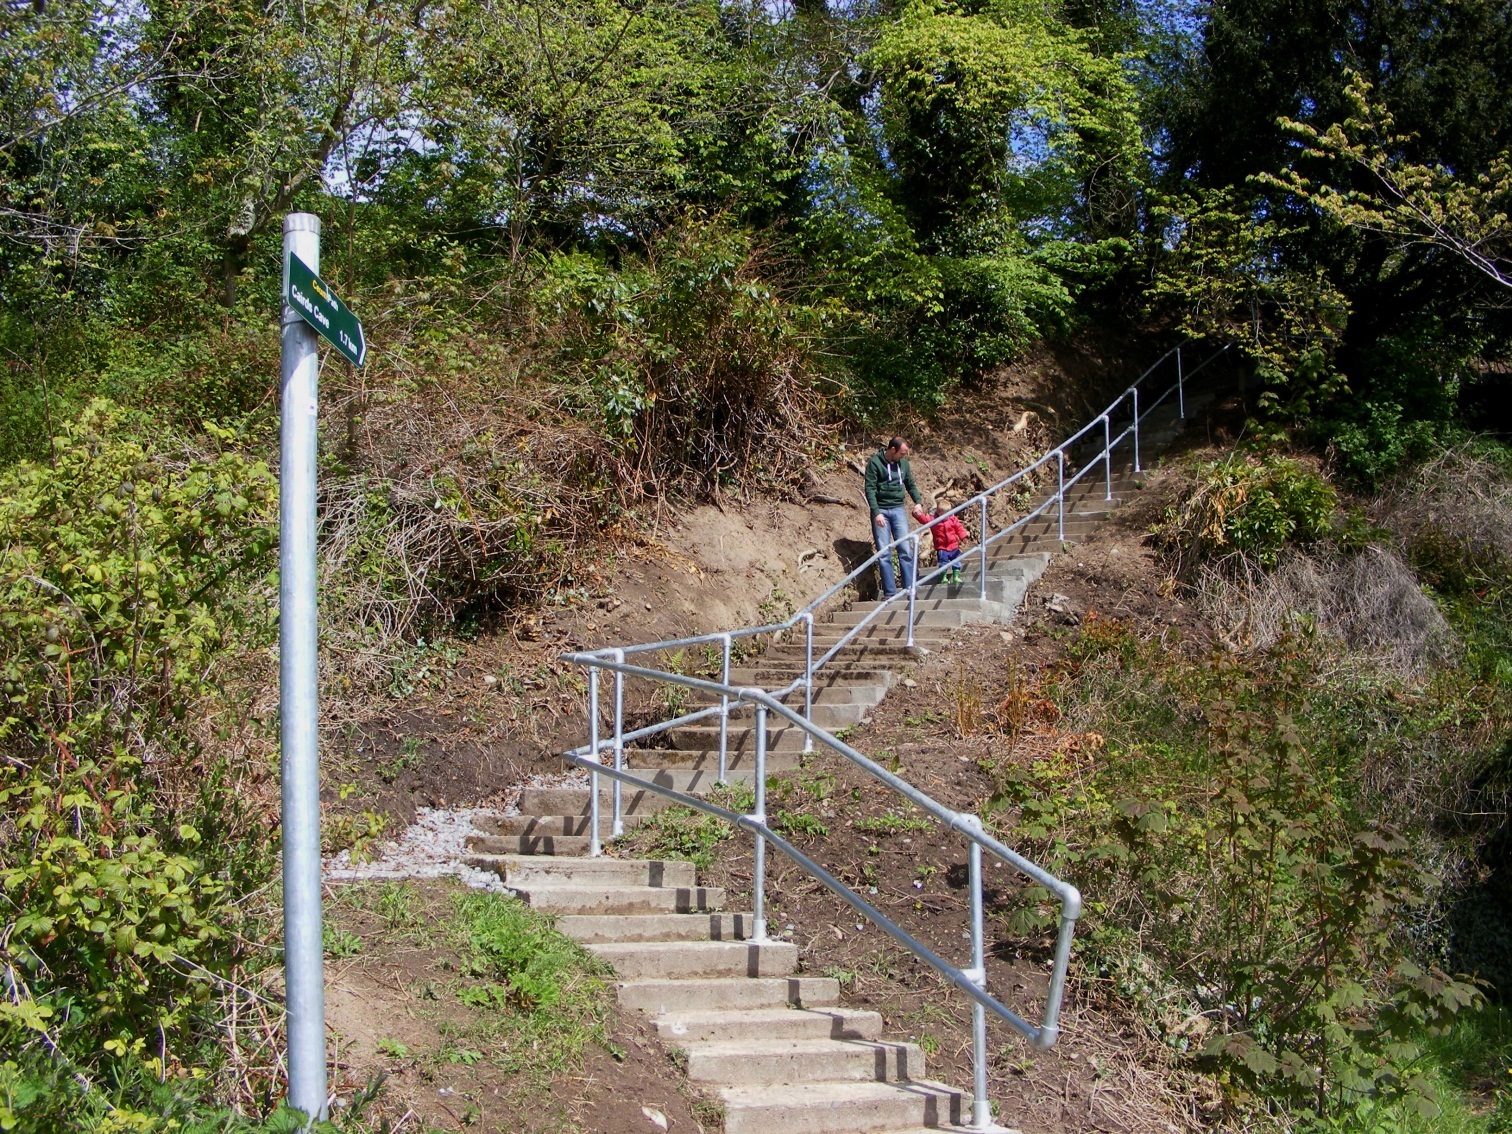 The restored steps at Rosemarkie